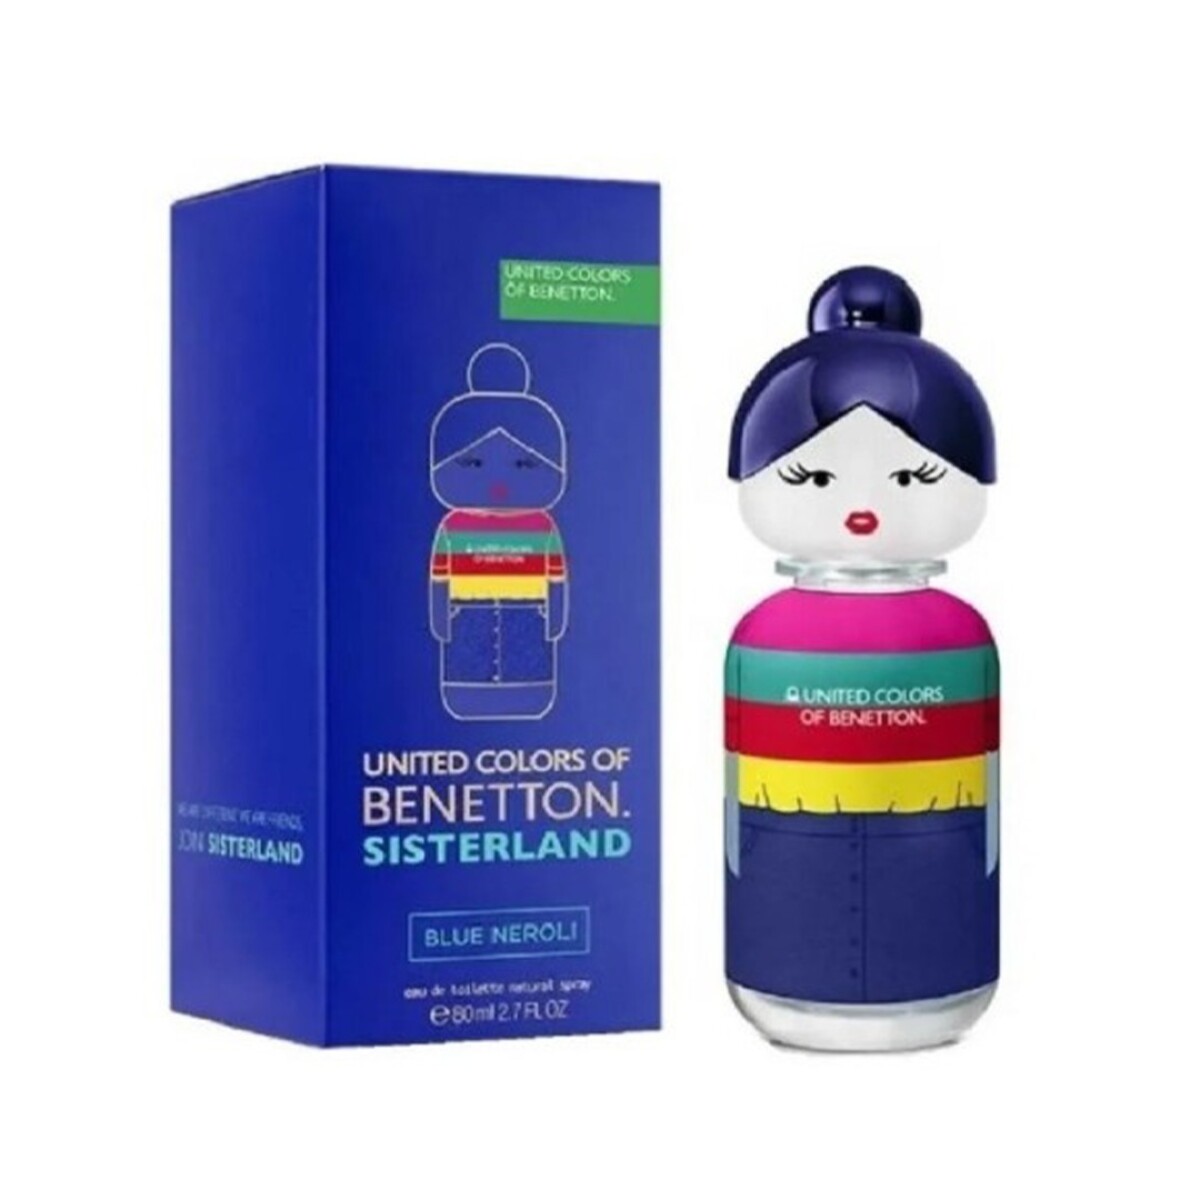 Perfume Benetton Sisterland Blue Neroli Edt 80ML - 001 